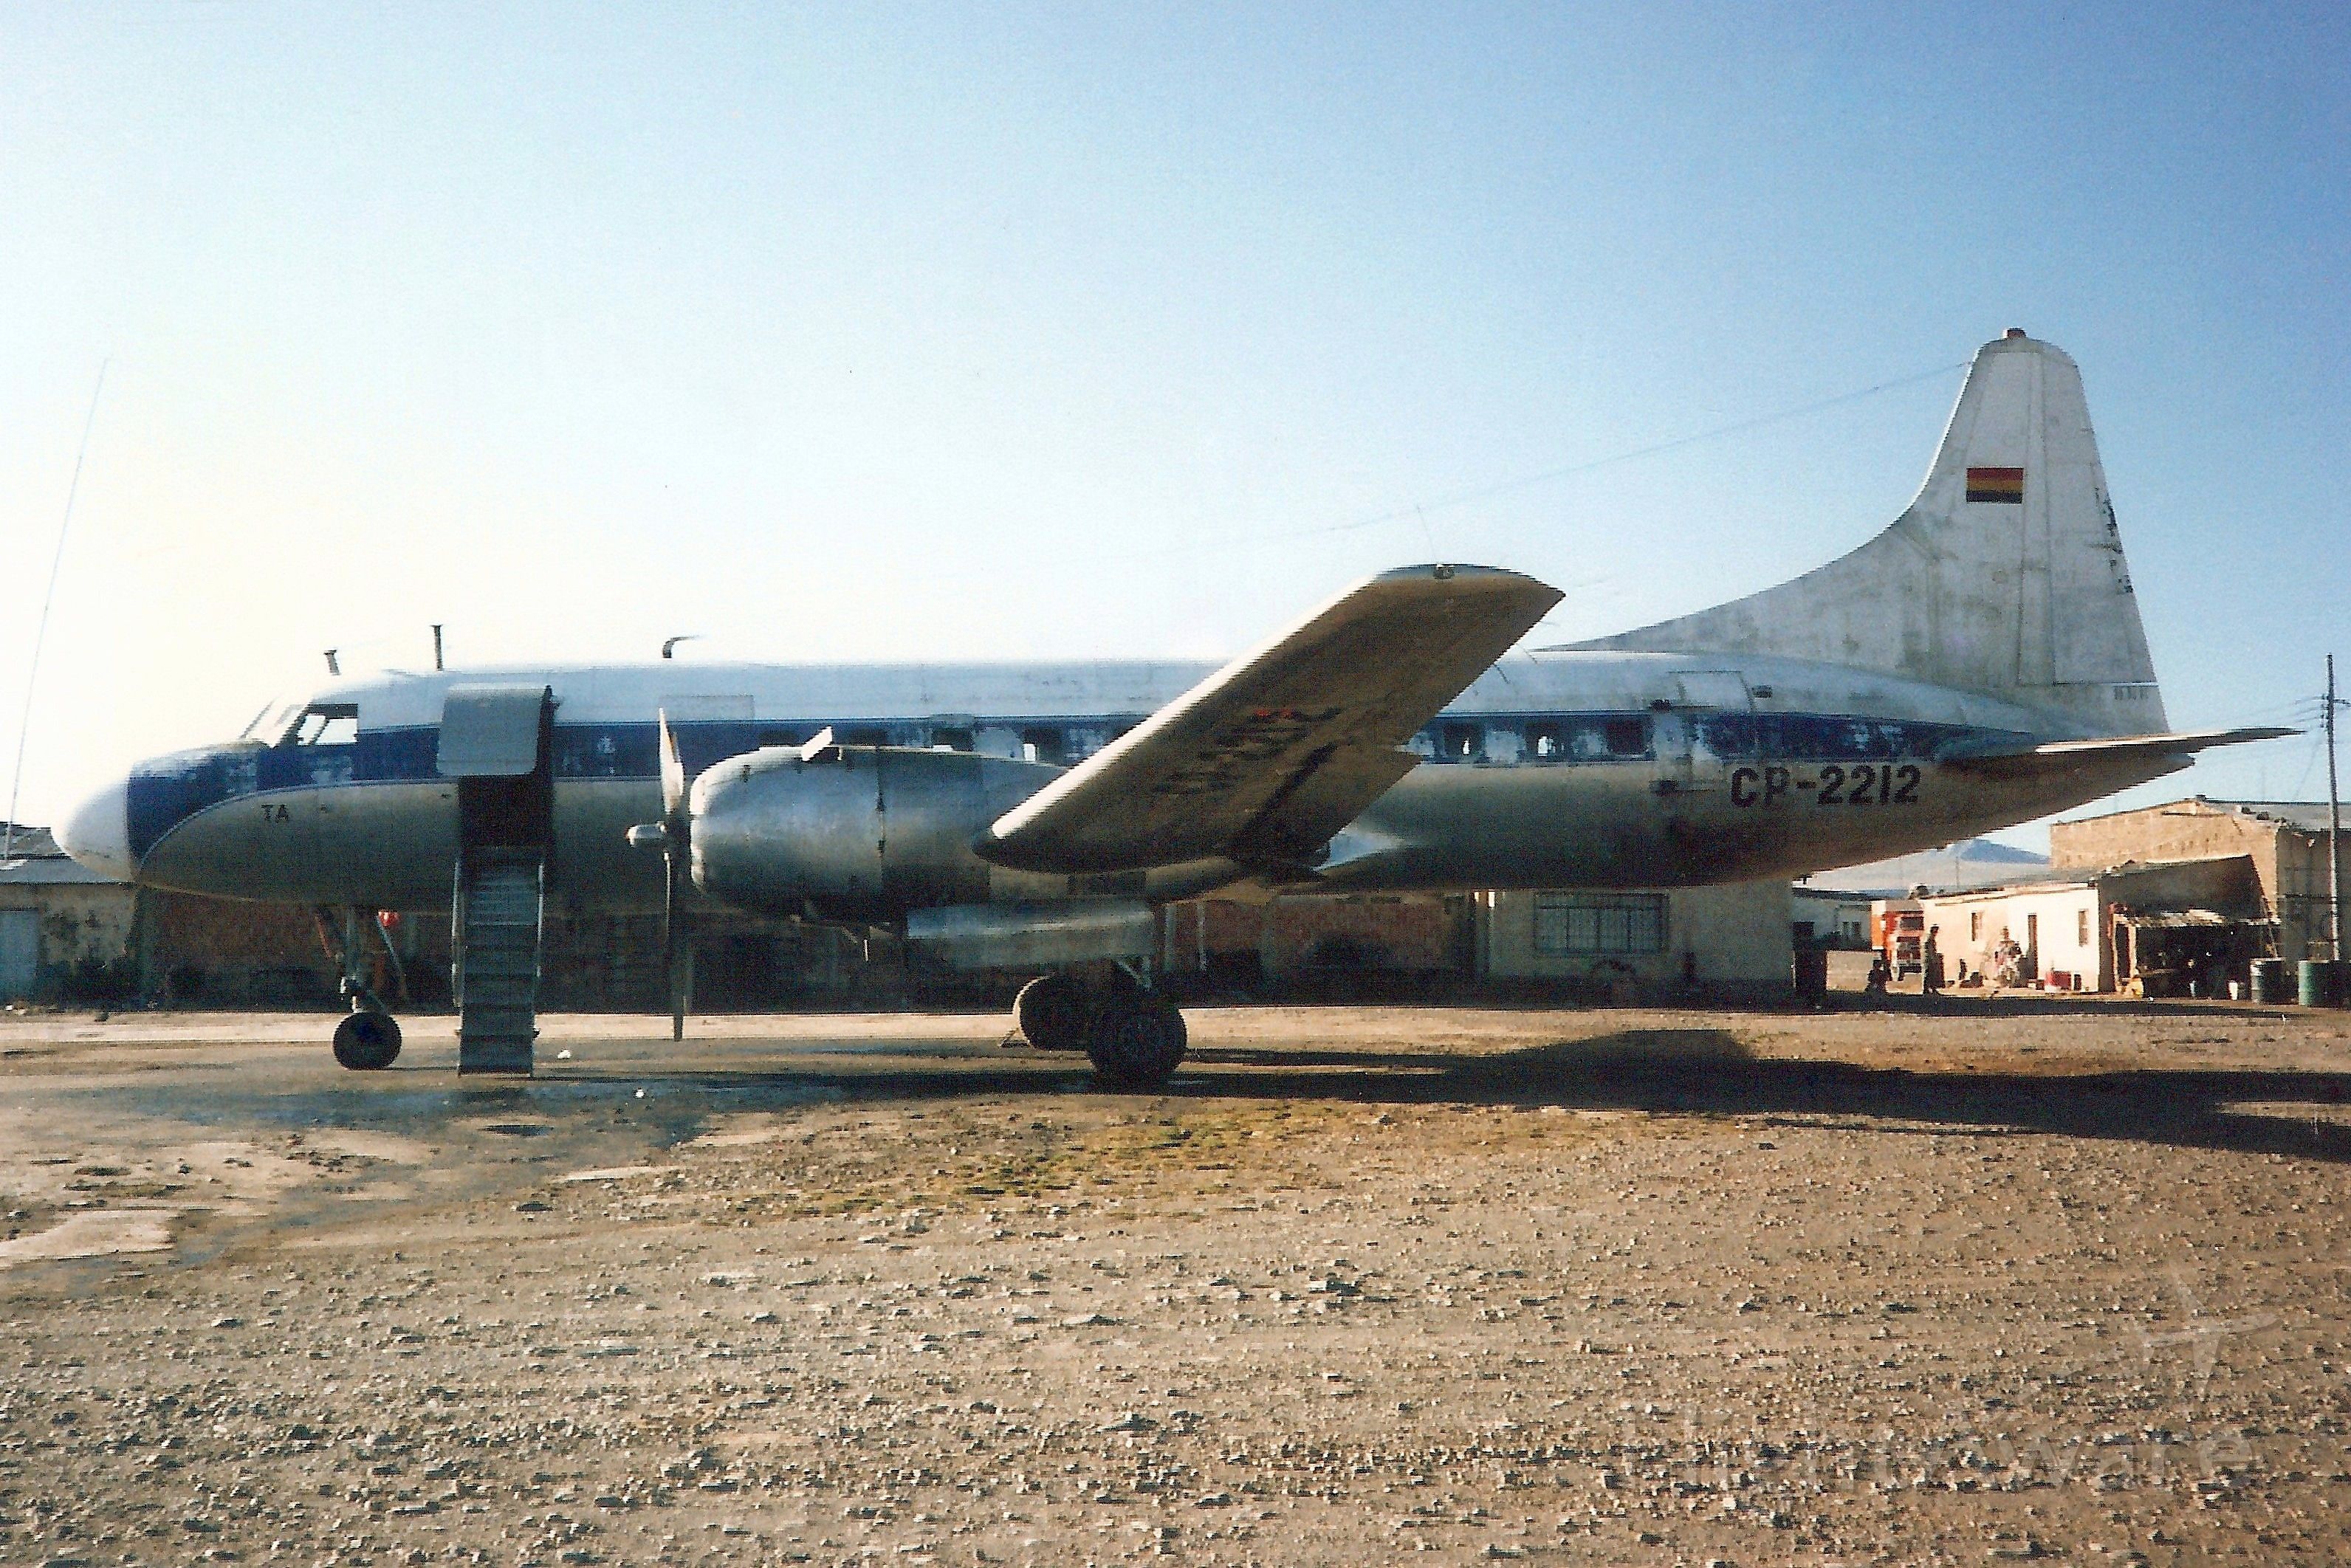 CONVAIR CV-340 Convairliner (CP-2212) - Seen here in Jul-93.br /br /Written off 3-Nov-93 near La Paz.